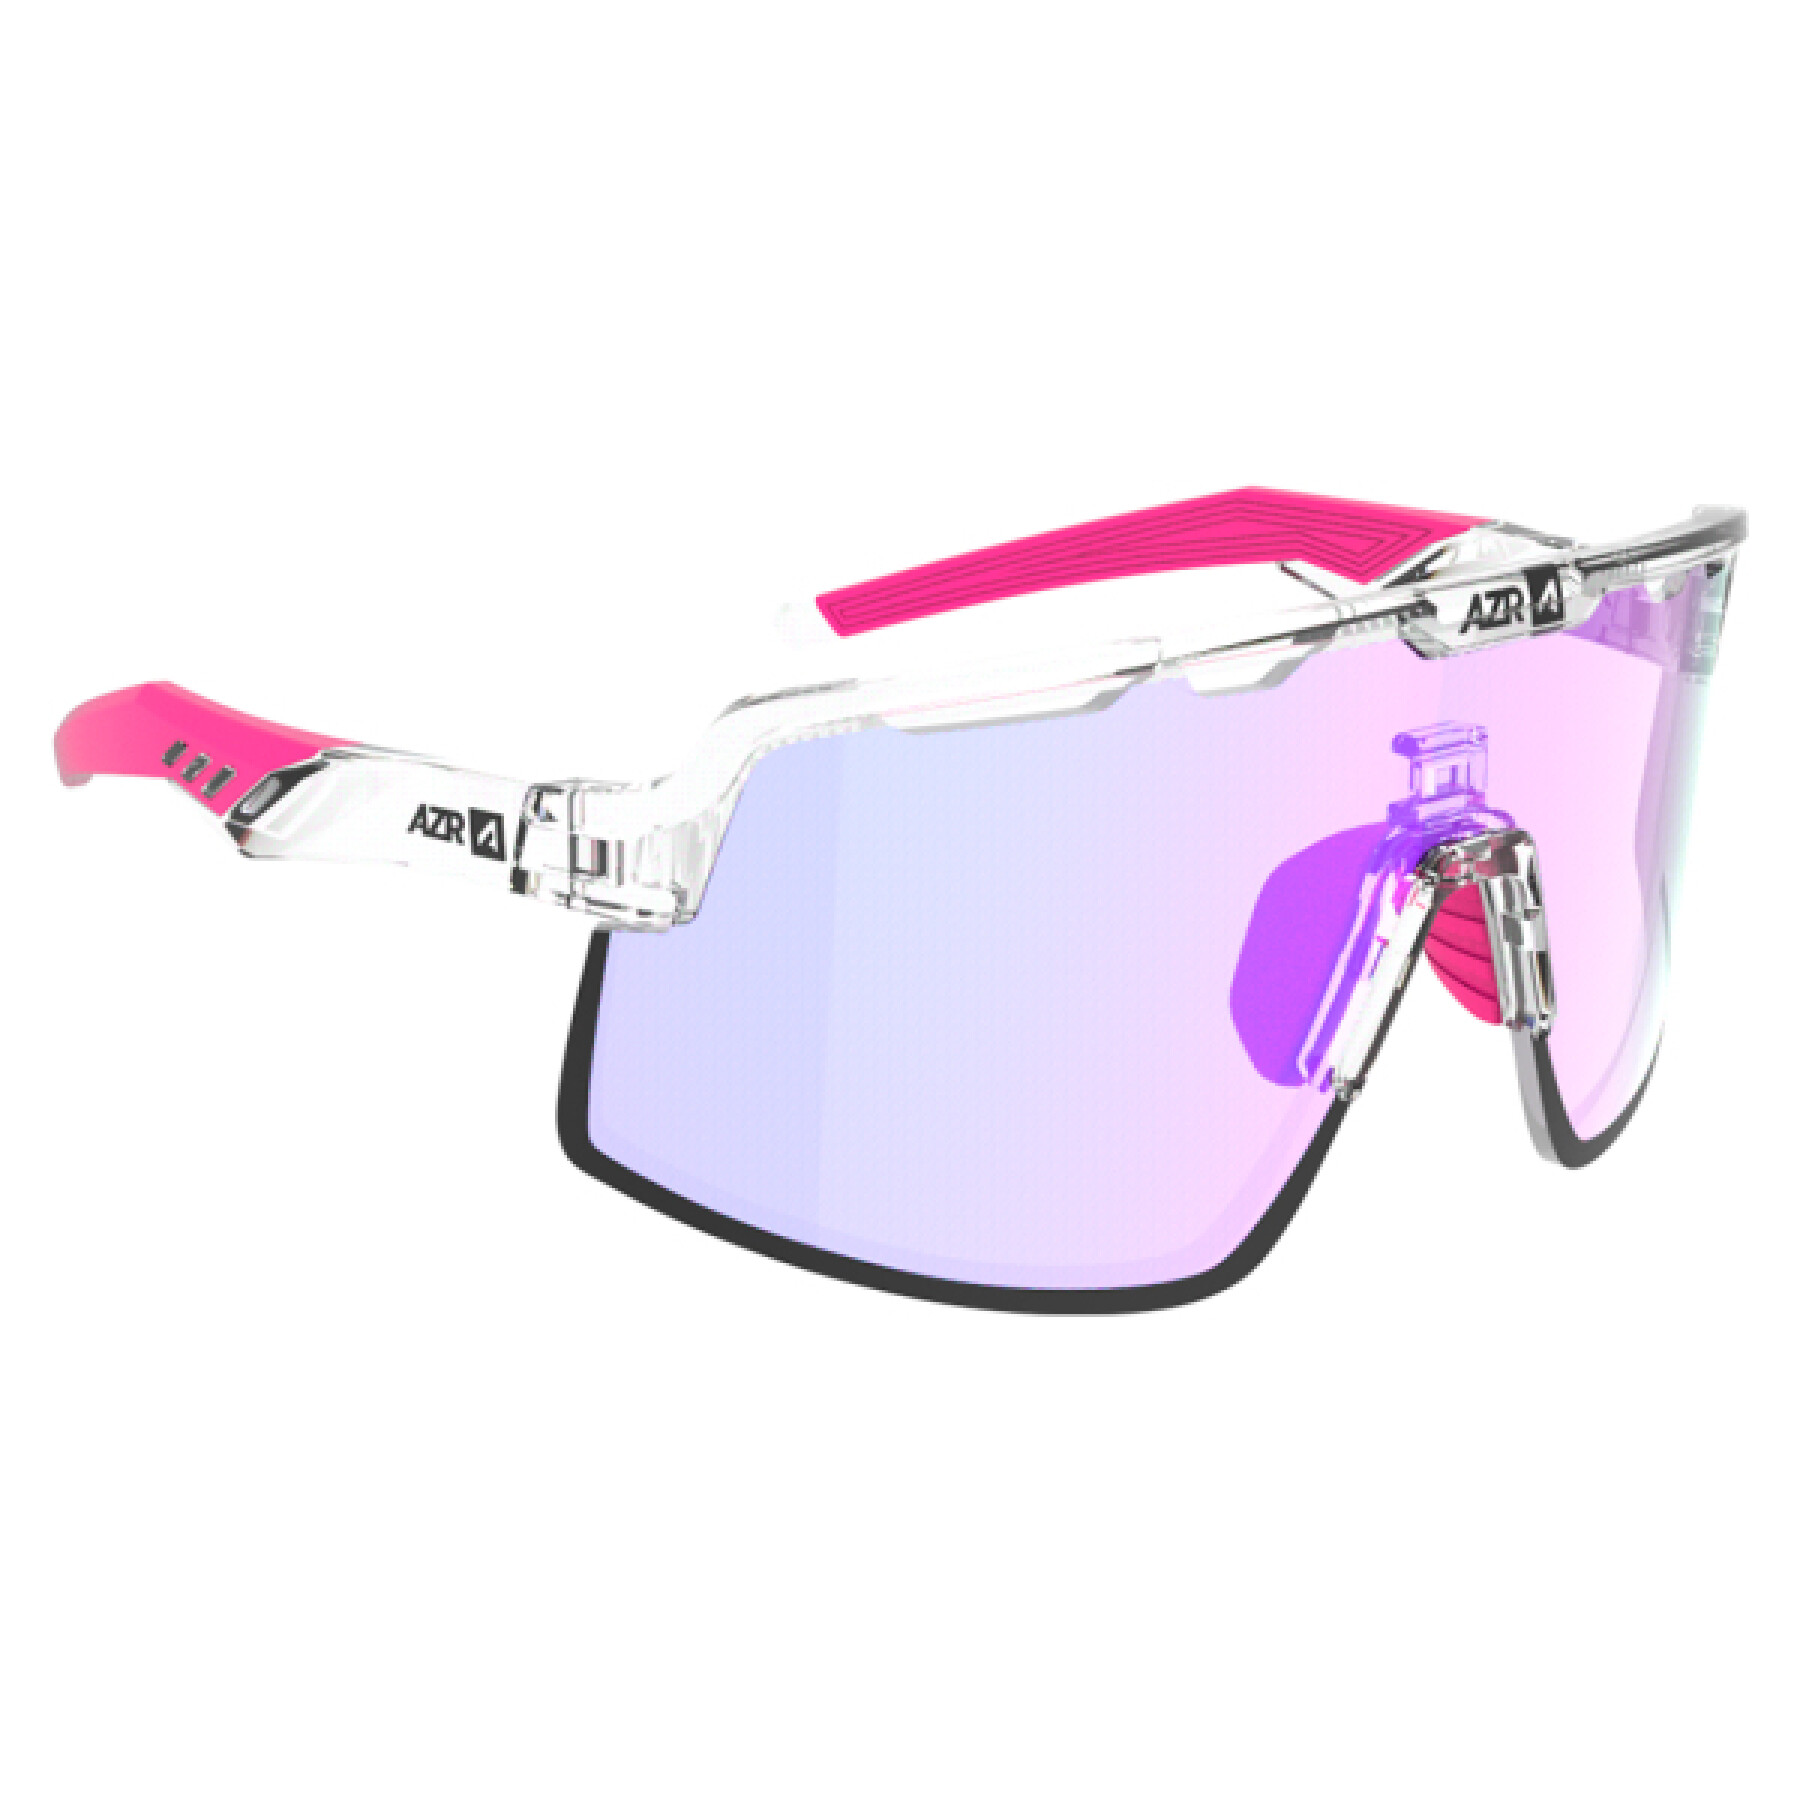 Sunglasses AZR Pro Kromic Speed RX